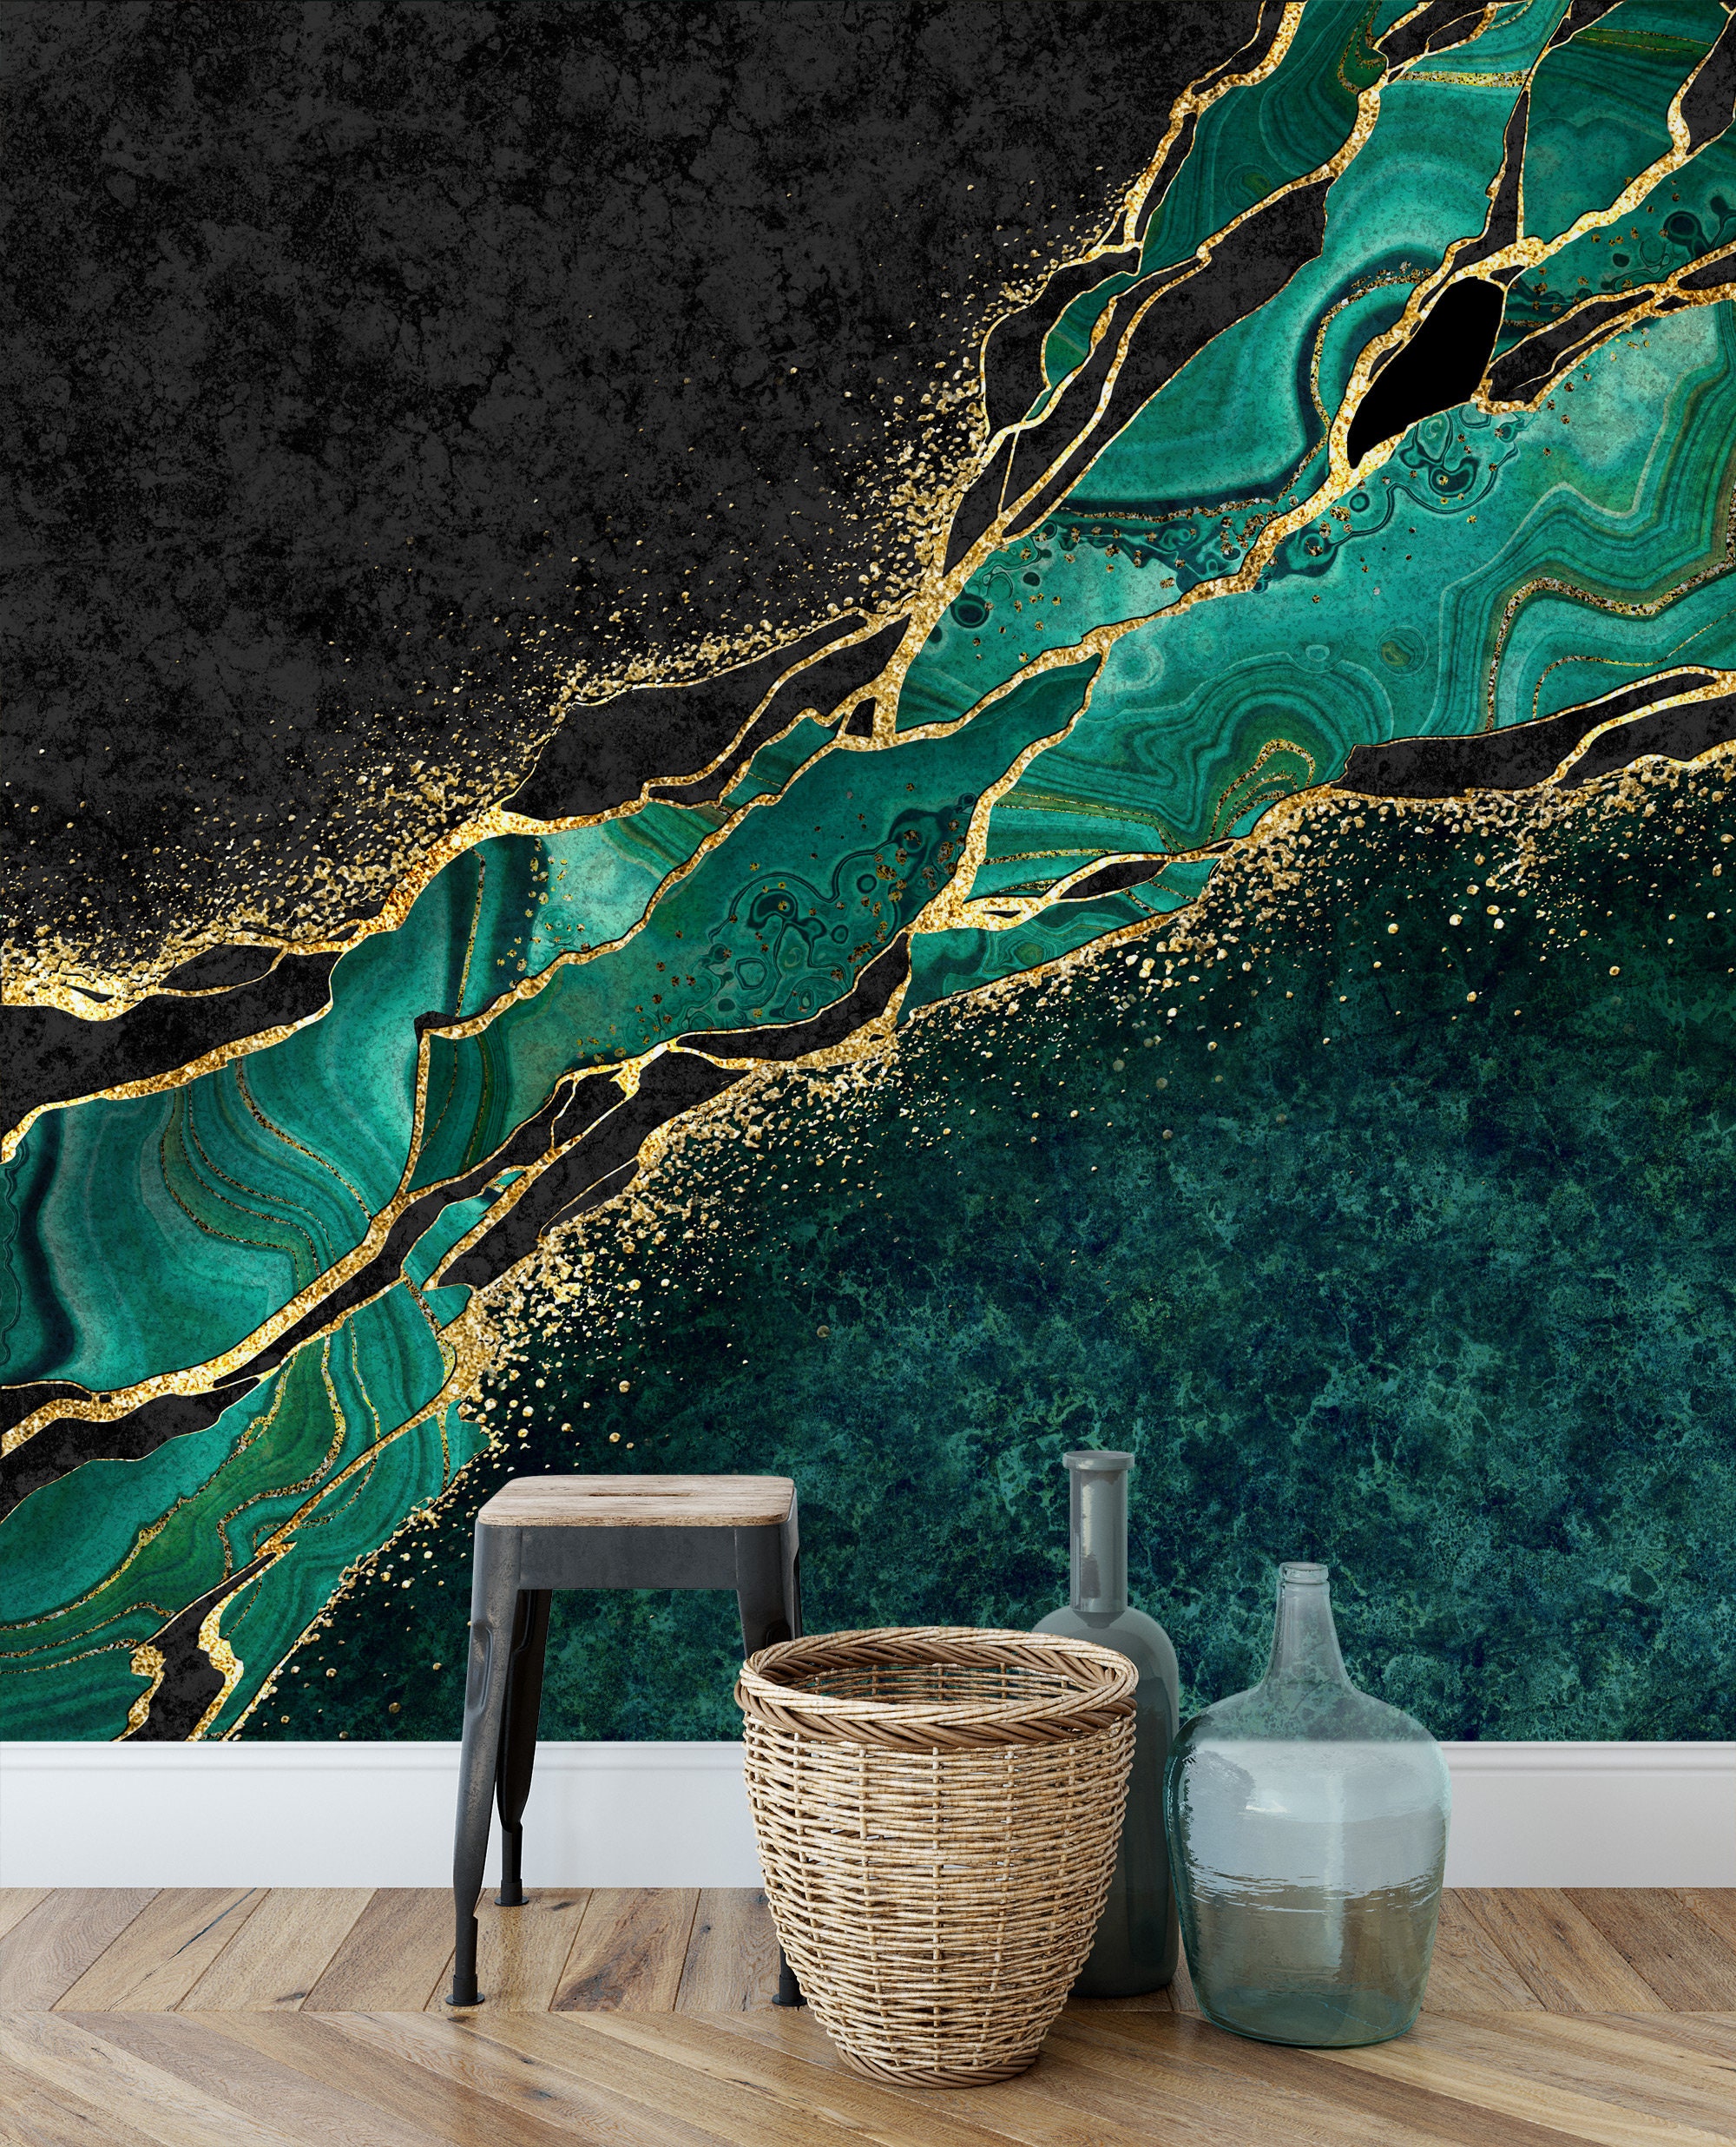 Green Marble With Golden Splash Wallpaper, Gold Veins Wall Mural